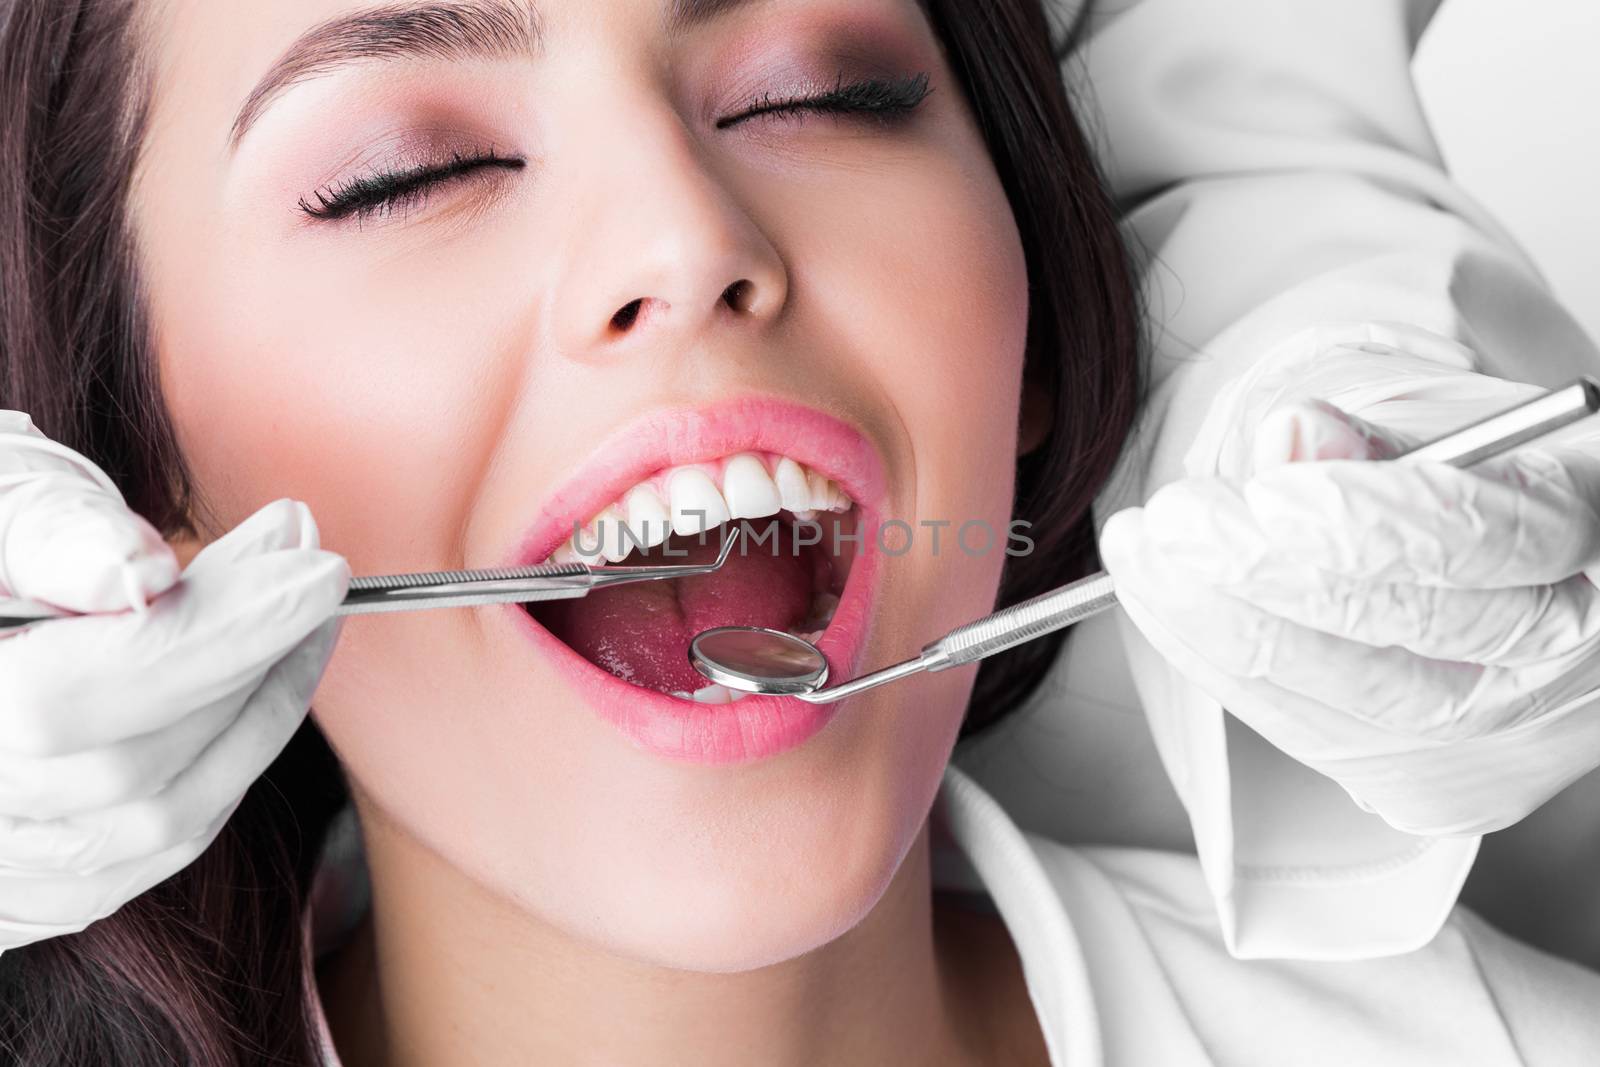 Dentist examines teeth by Yellowj